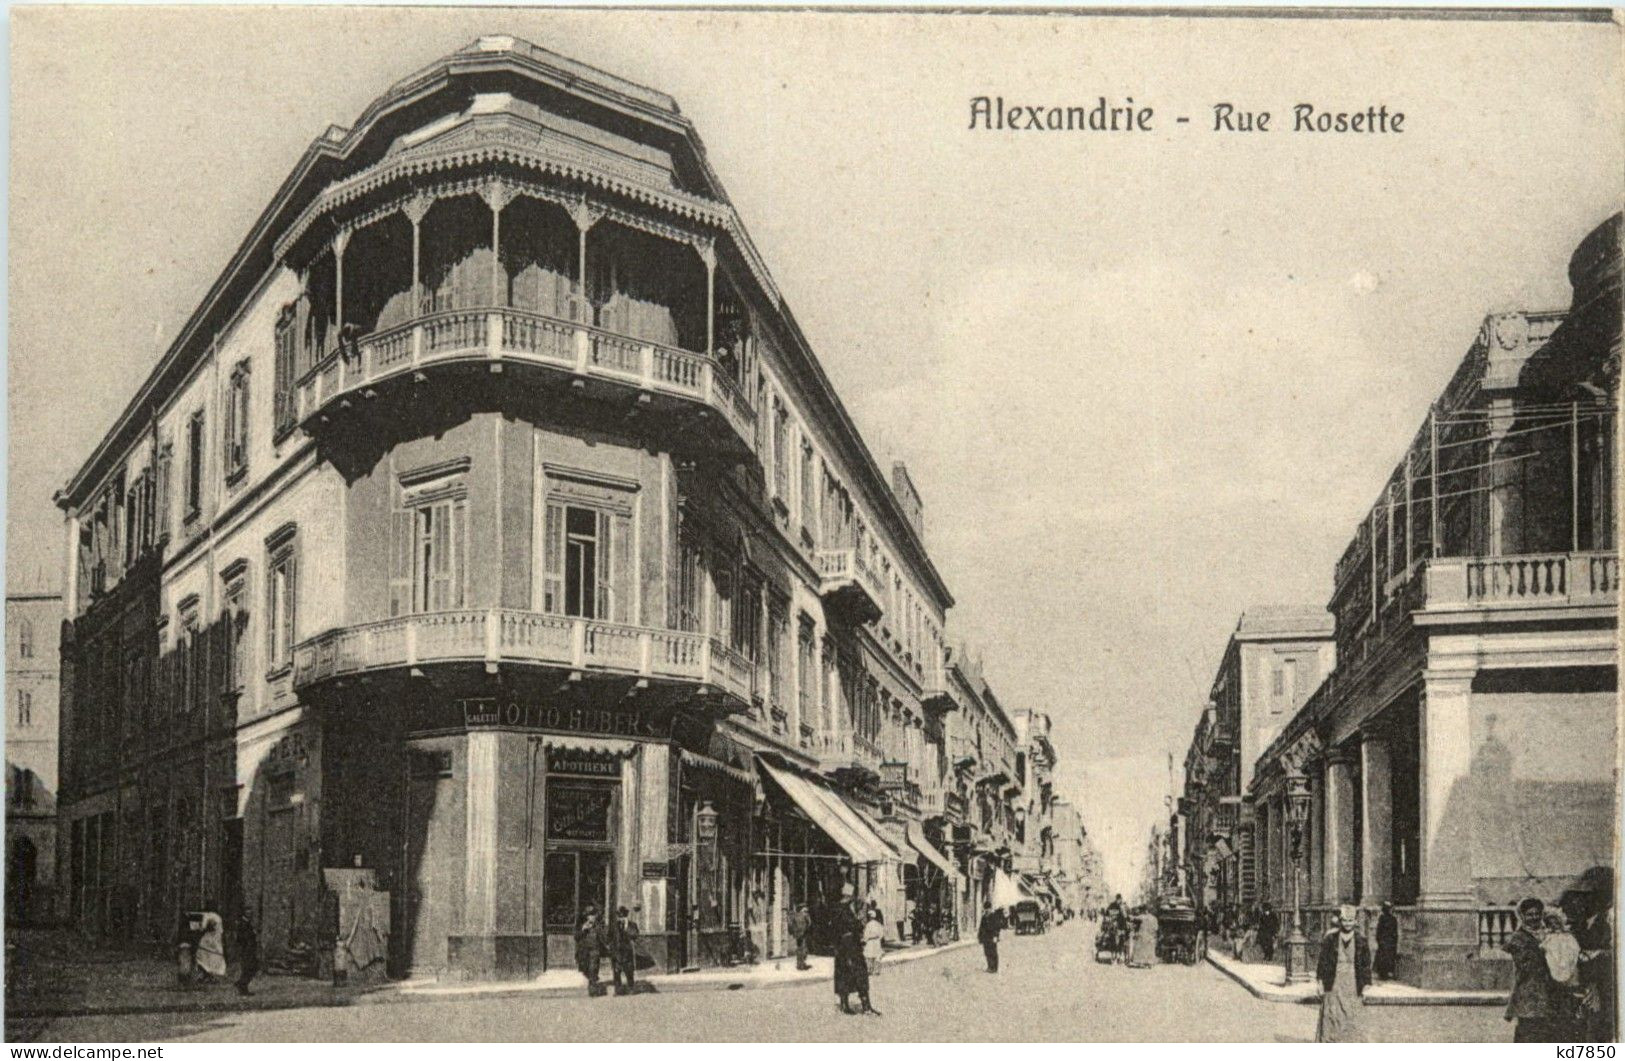 Alexandria - Rue Rosette - Alexandrie